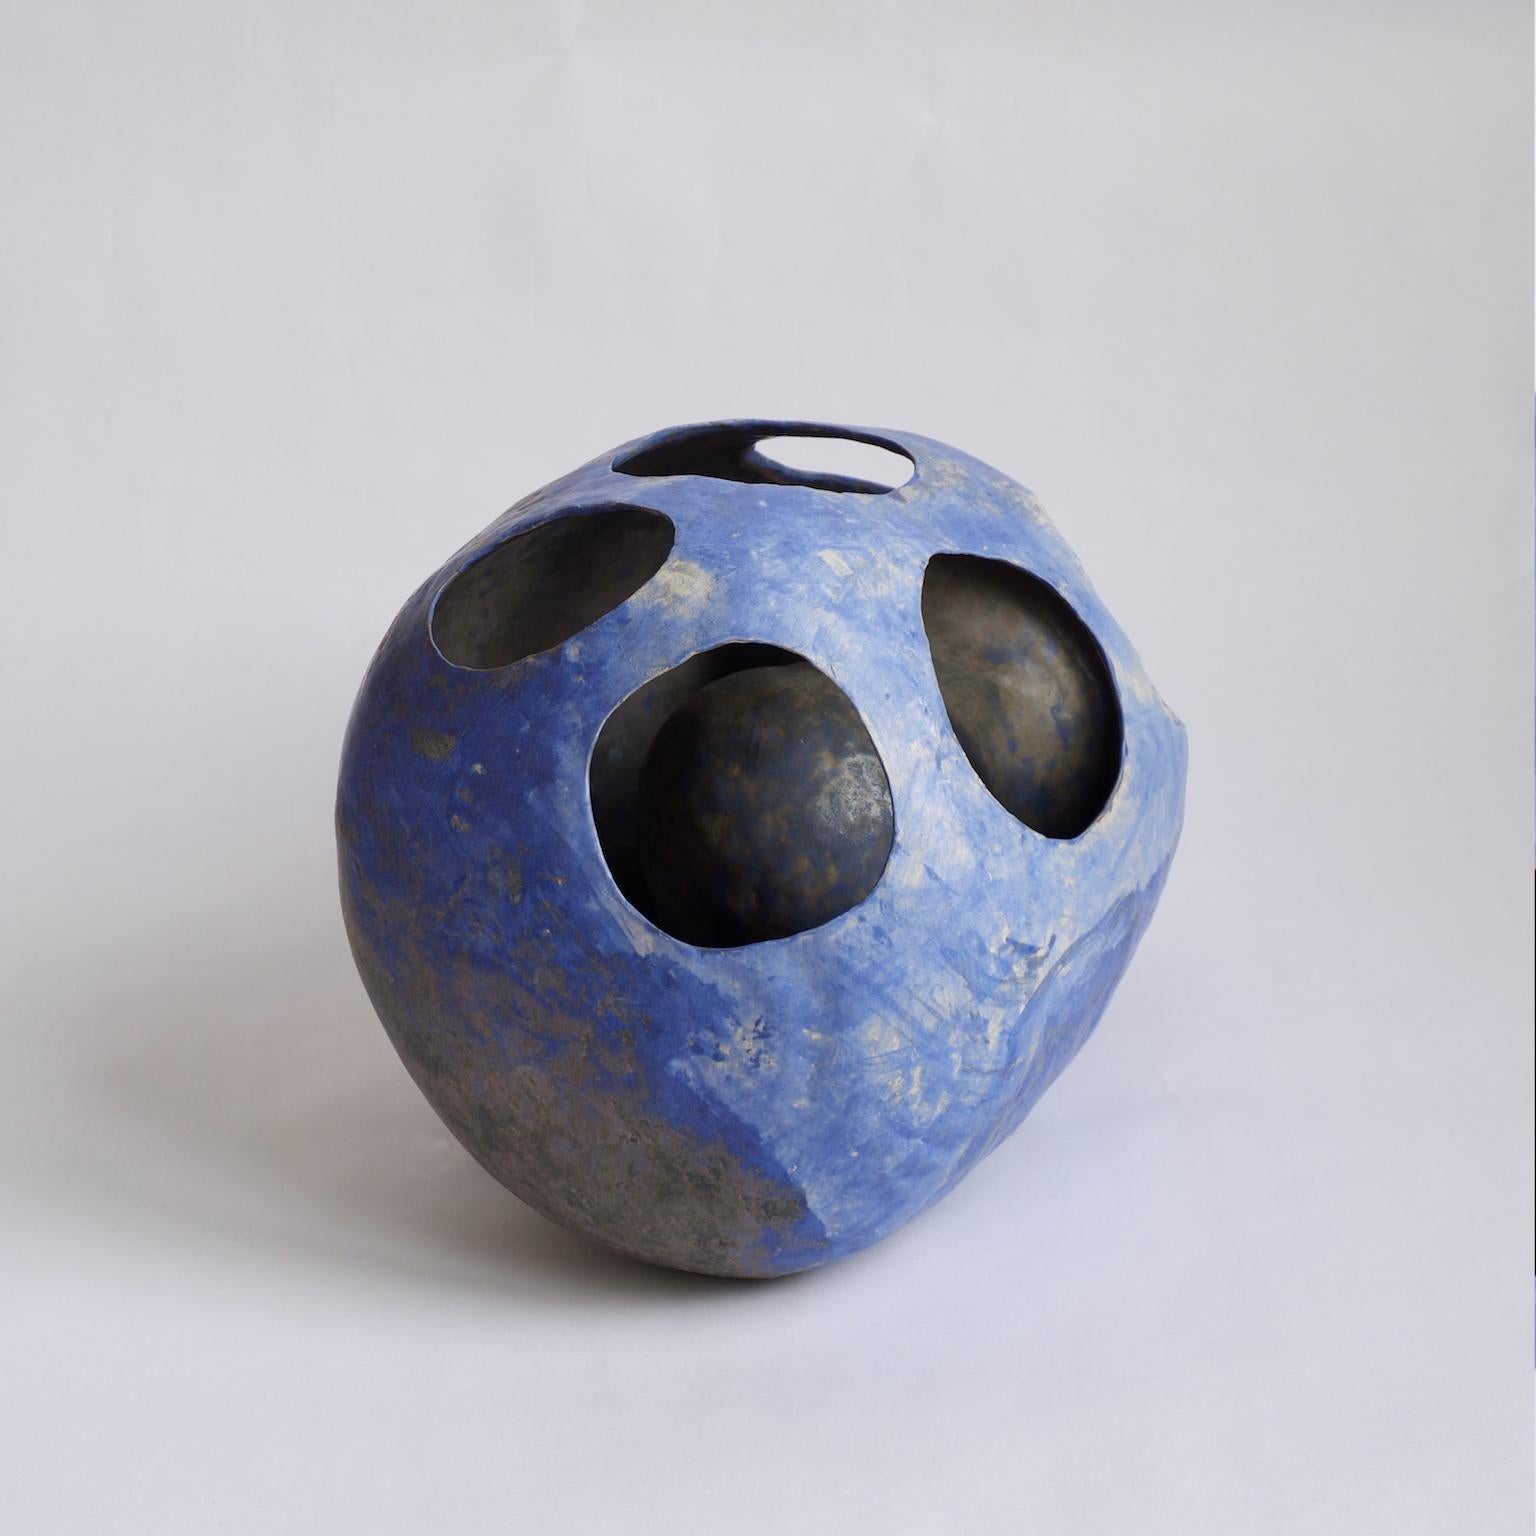 American Hand-Built Ceramic Contemporary Sculpture in Cobalt Blue Oxide by Yuko Nishikawa